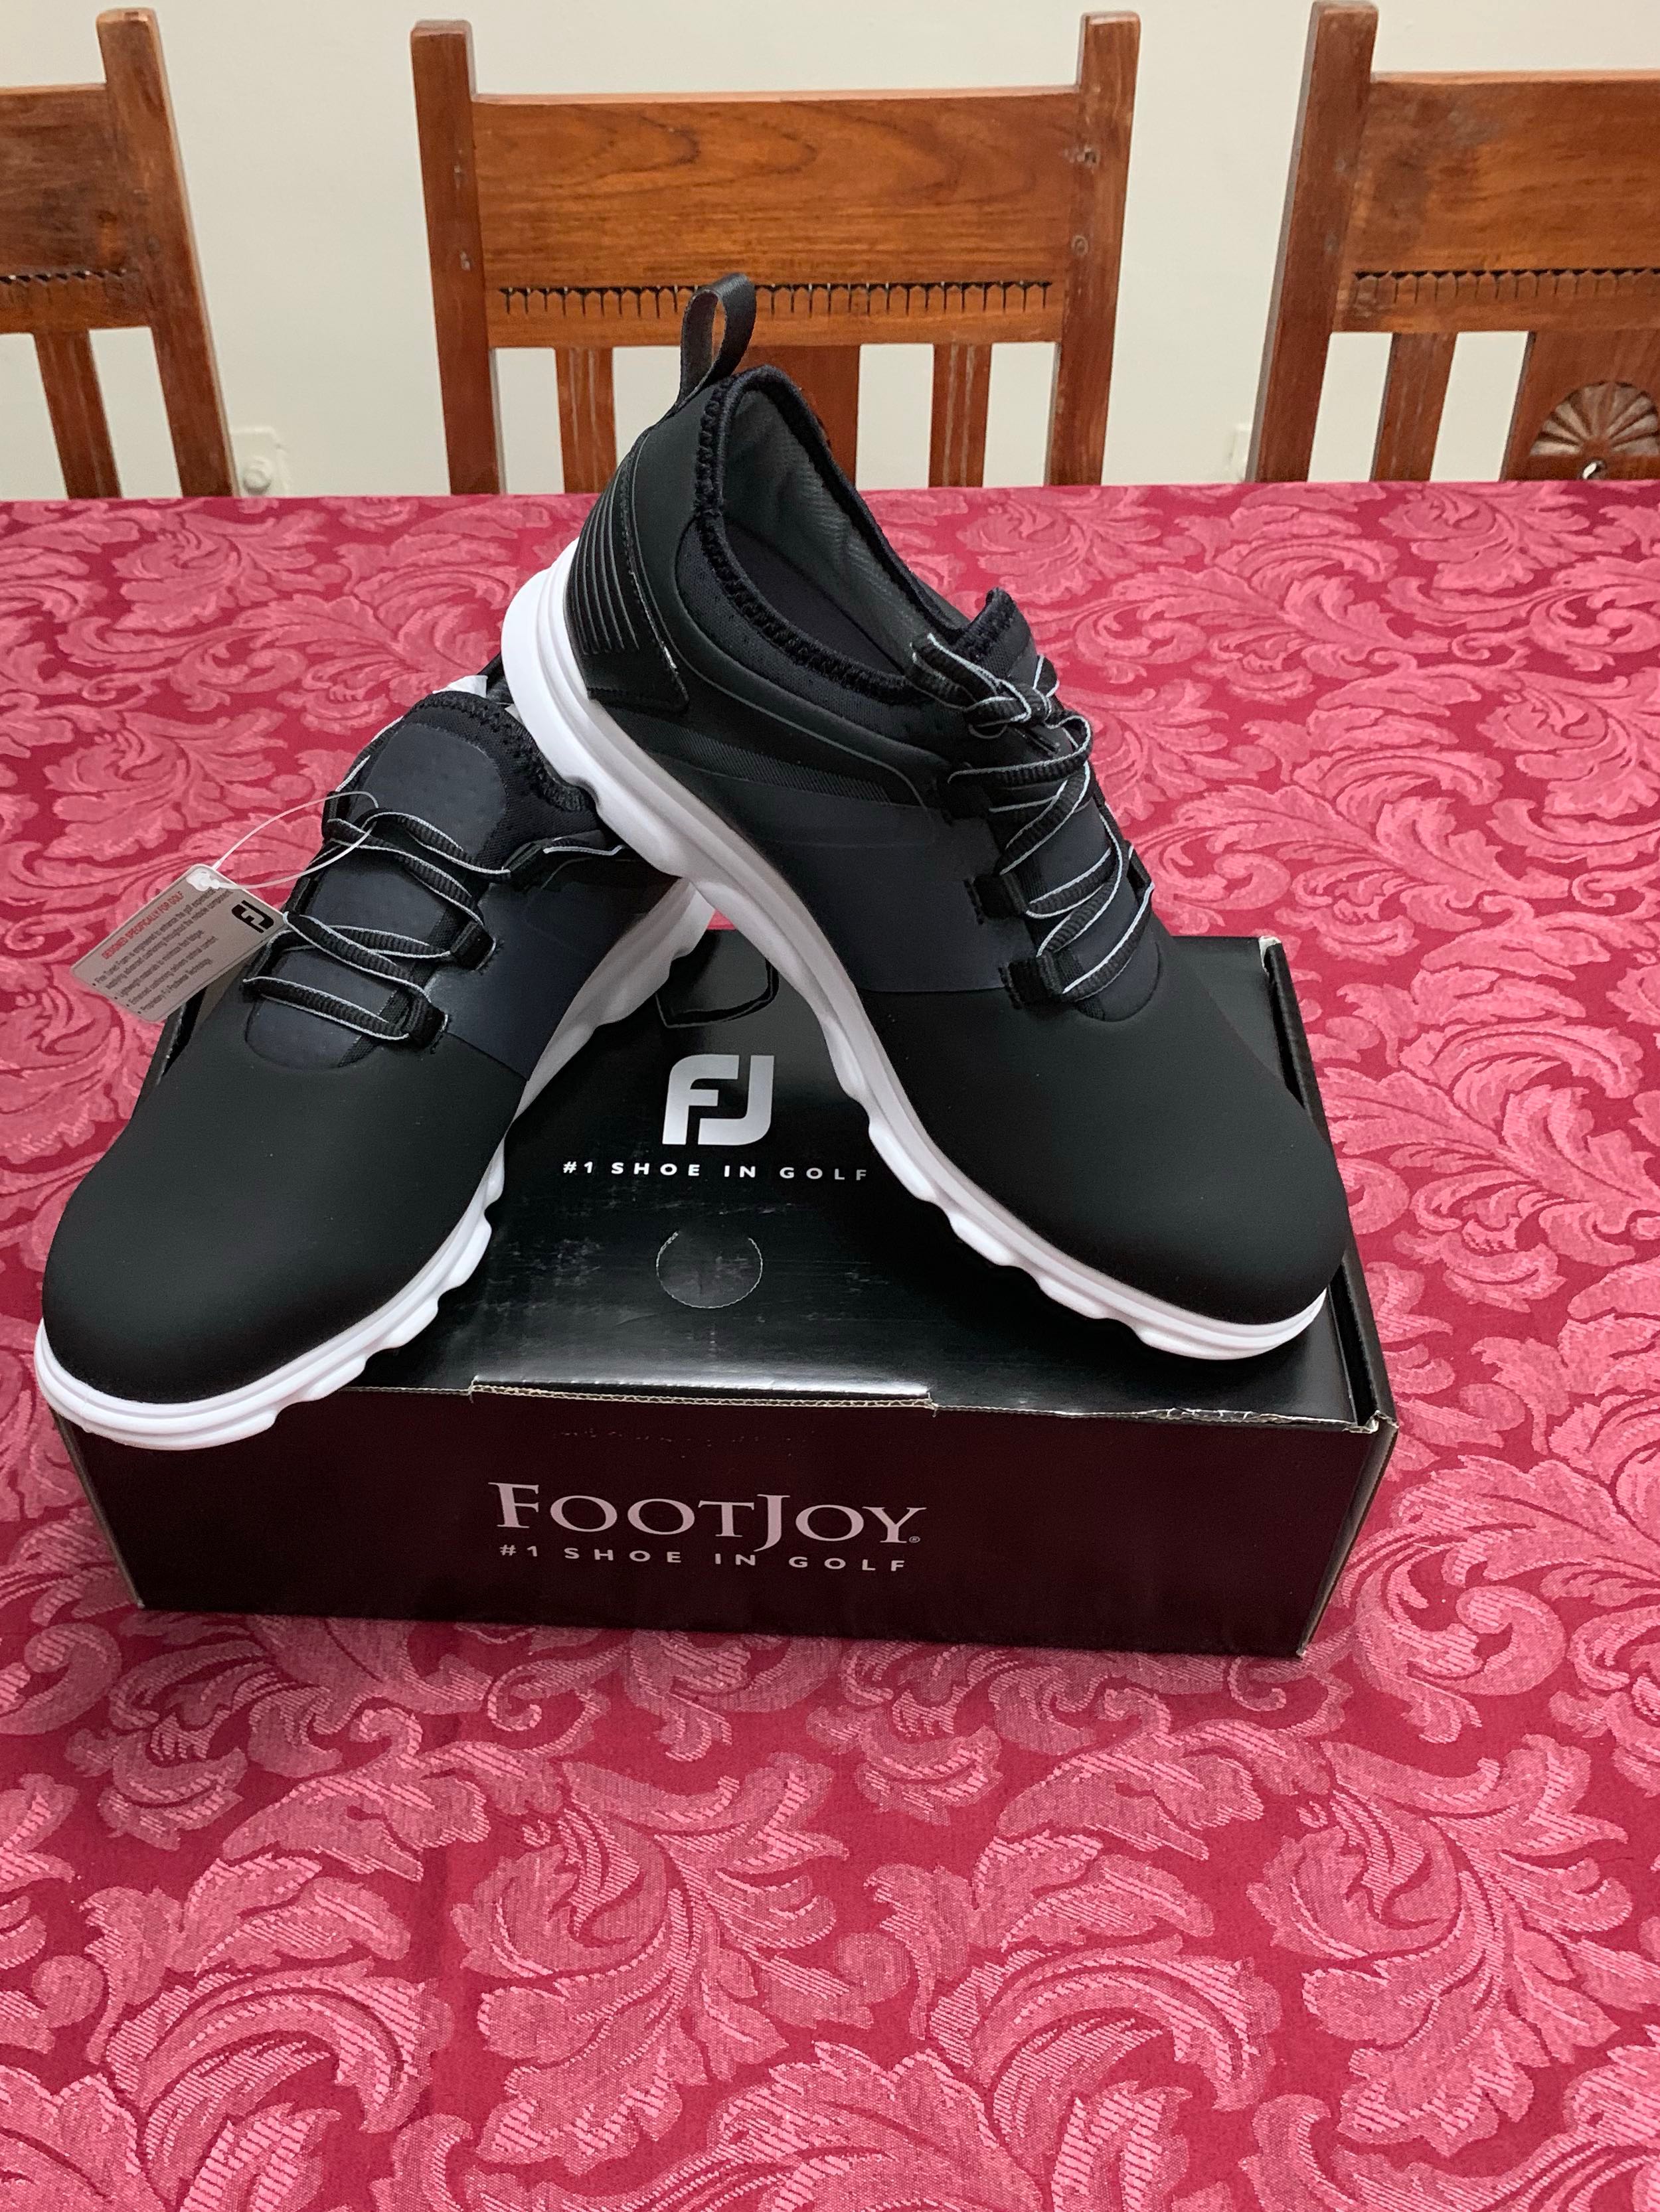 footjoy golf shoes superlites xp